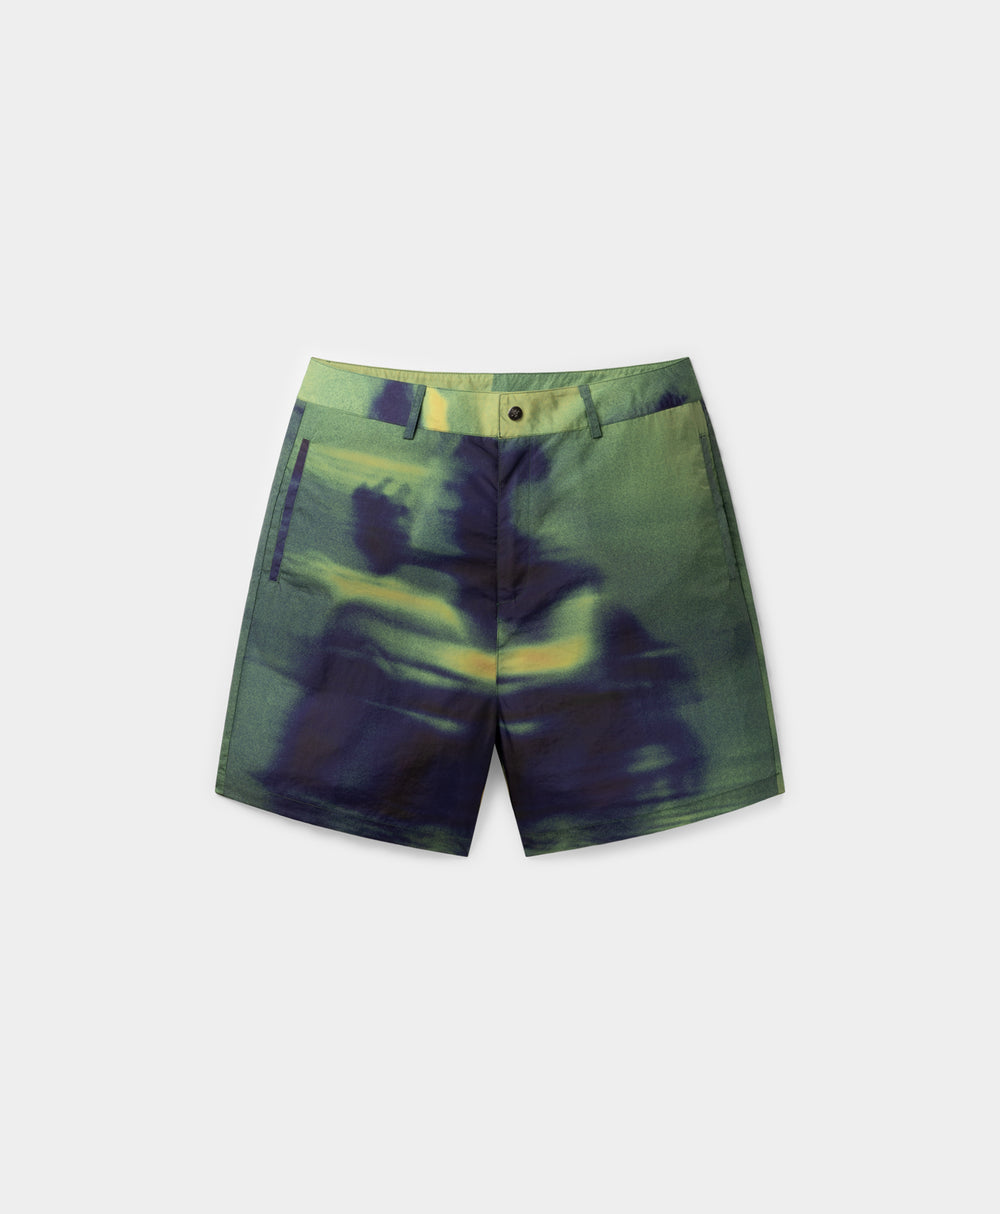 DP - Multi Yaro Hazy Shorts - Packshot - Front